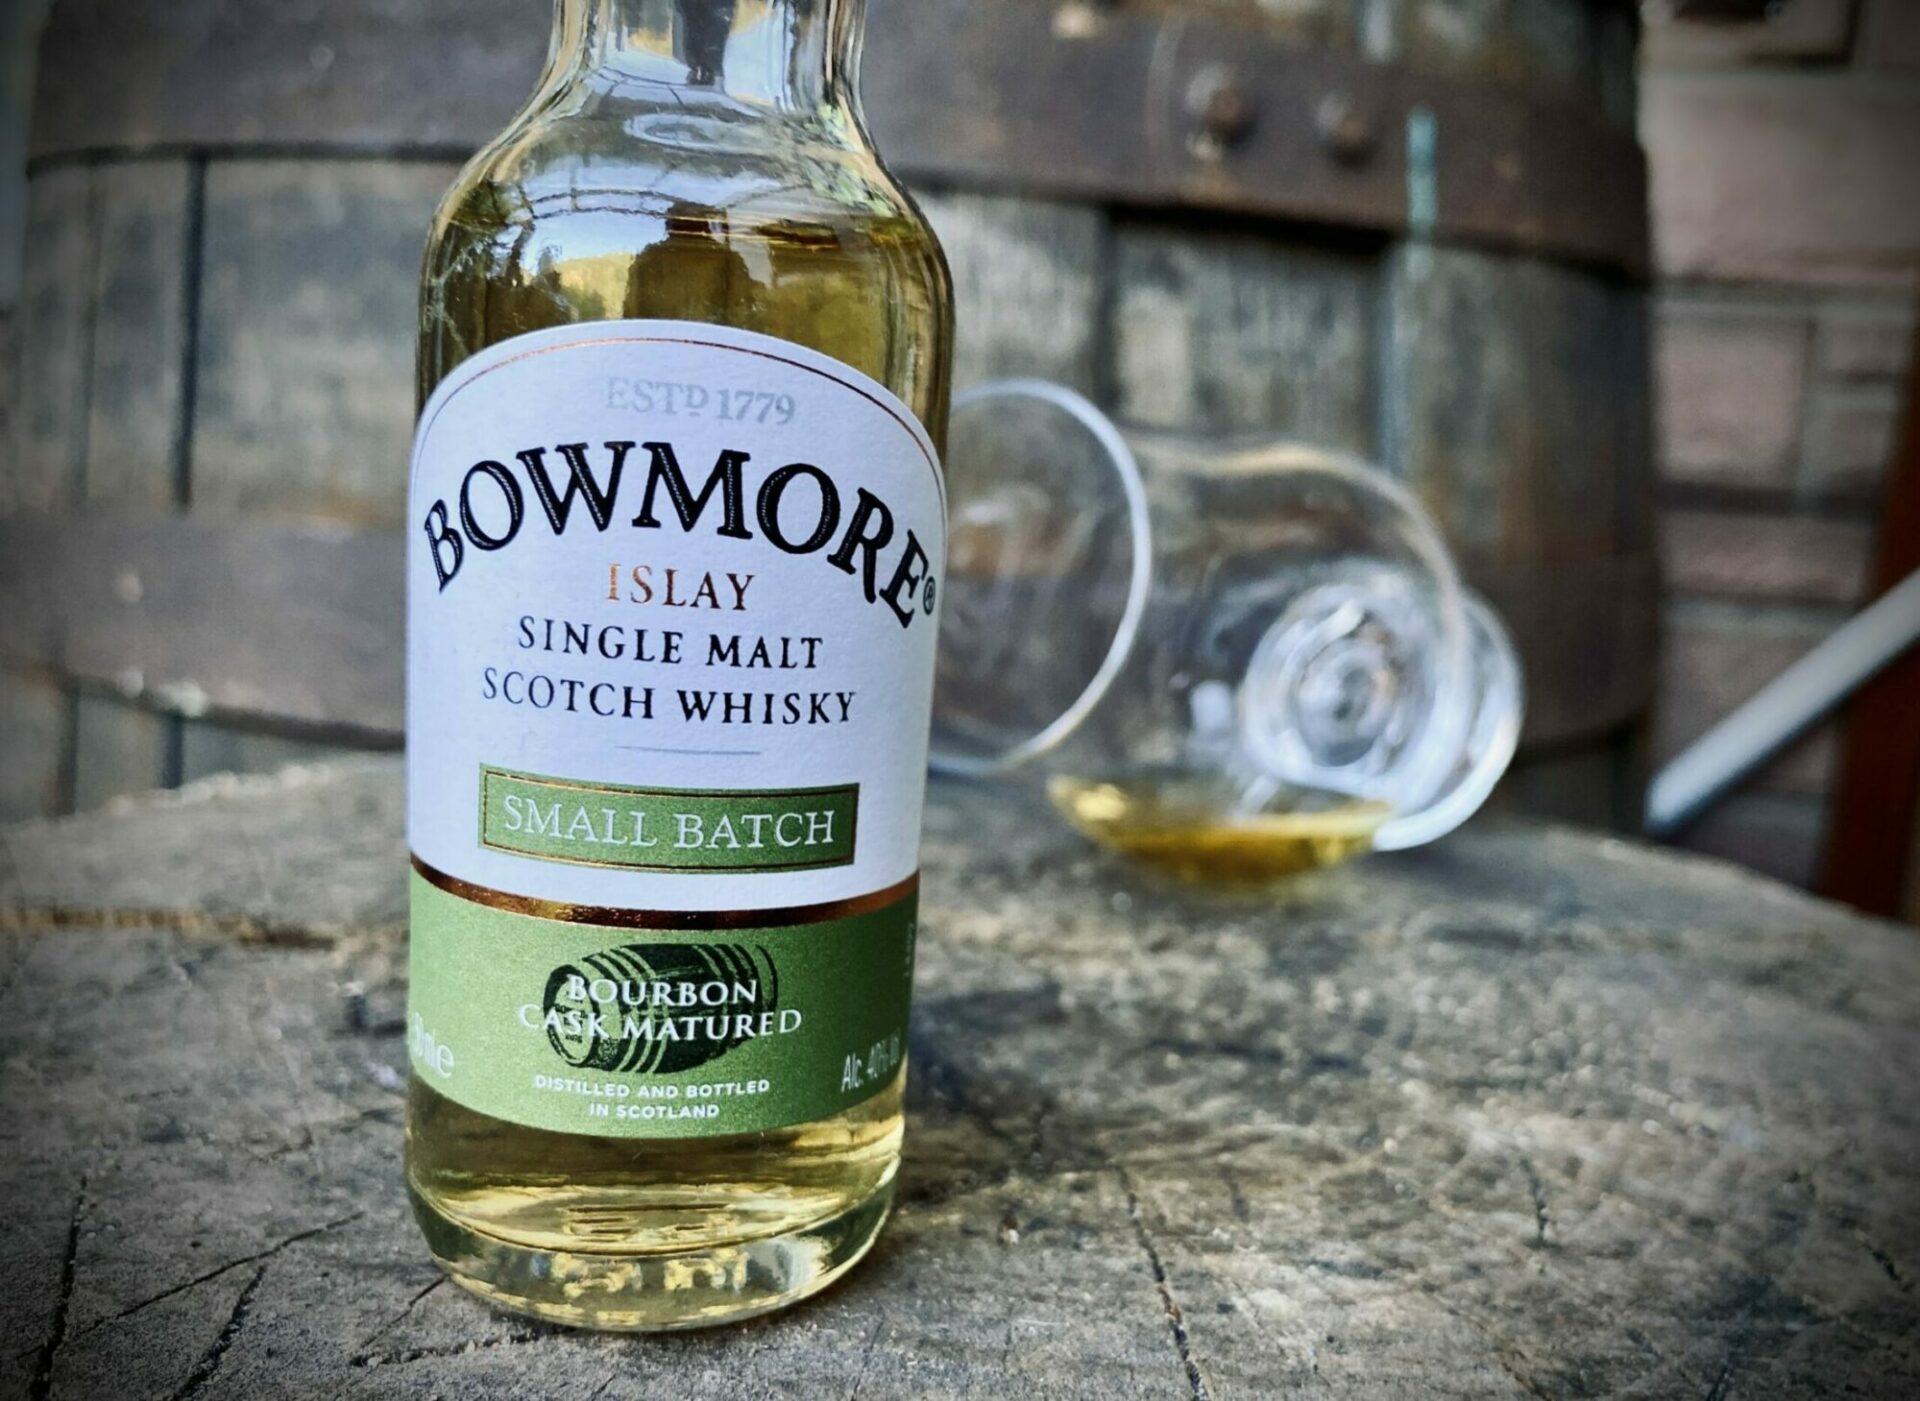 Bowmore Small Batch Islay Single Malt Scotch Whisky